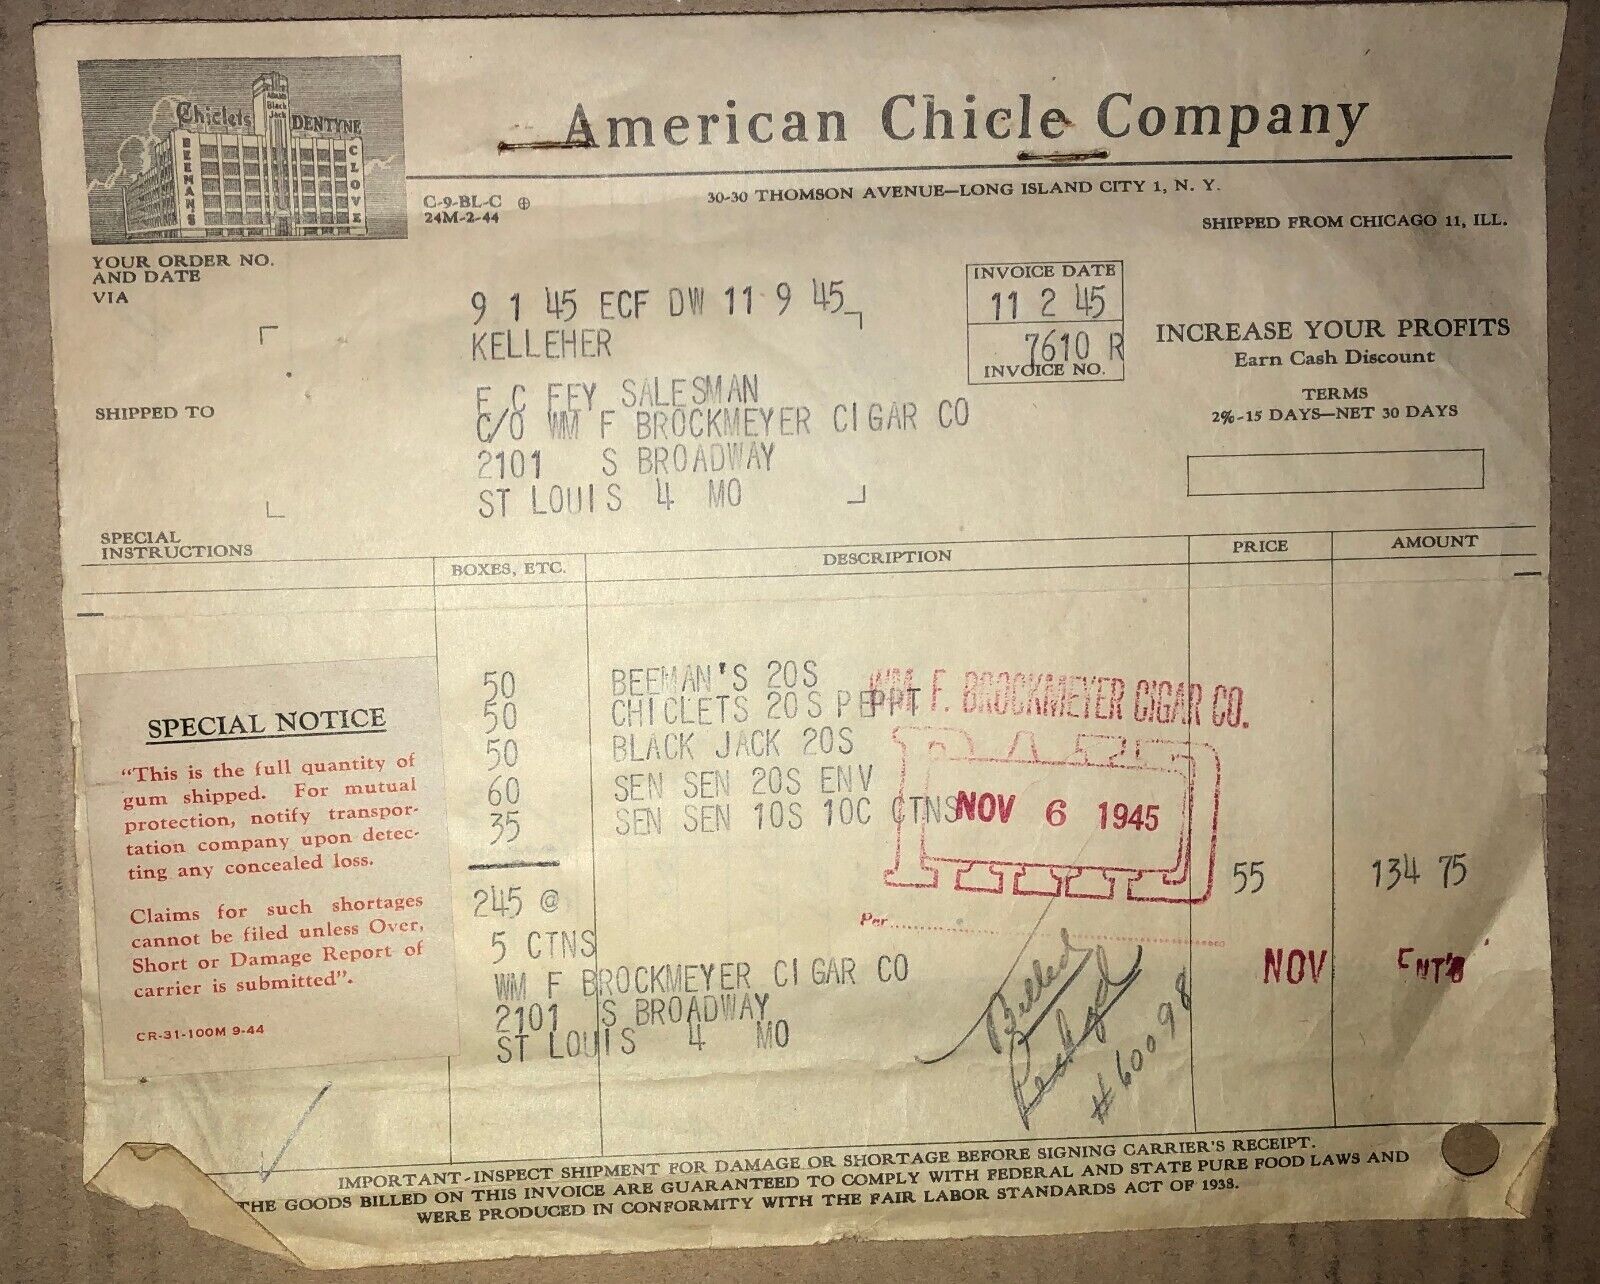 Gum Invoice Receipts November 6, 1945 Vintage Original American Chicle Old